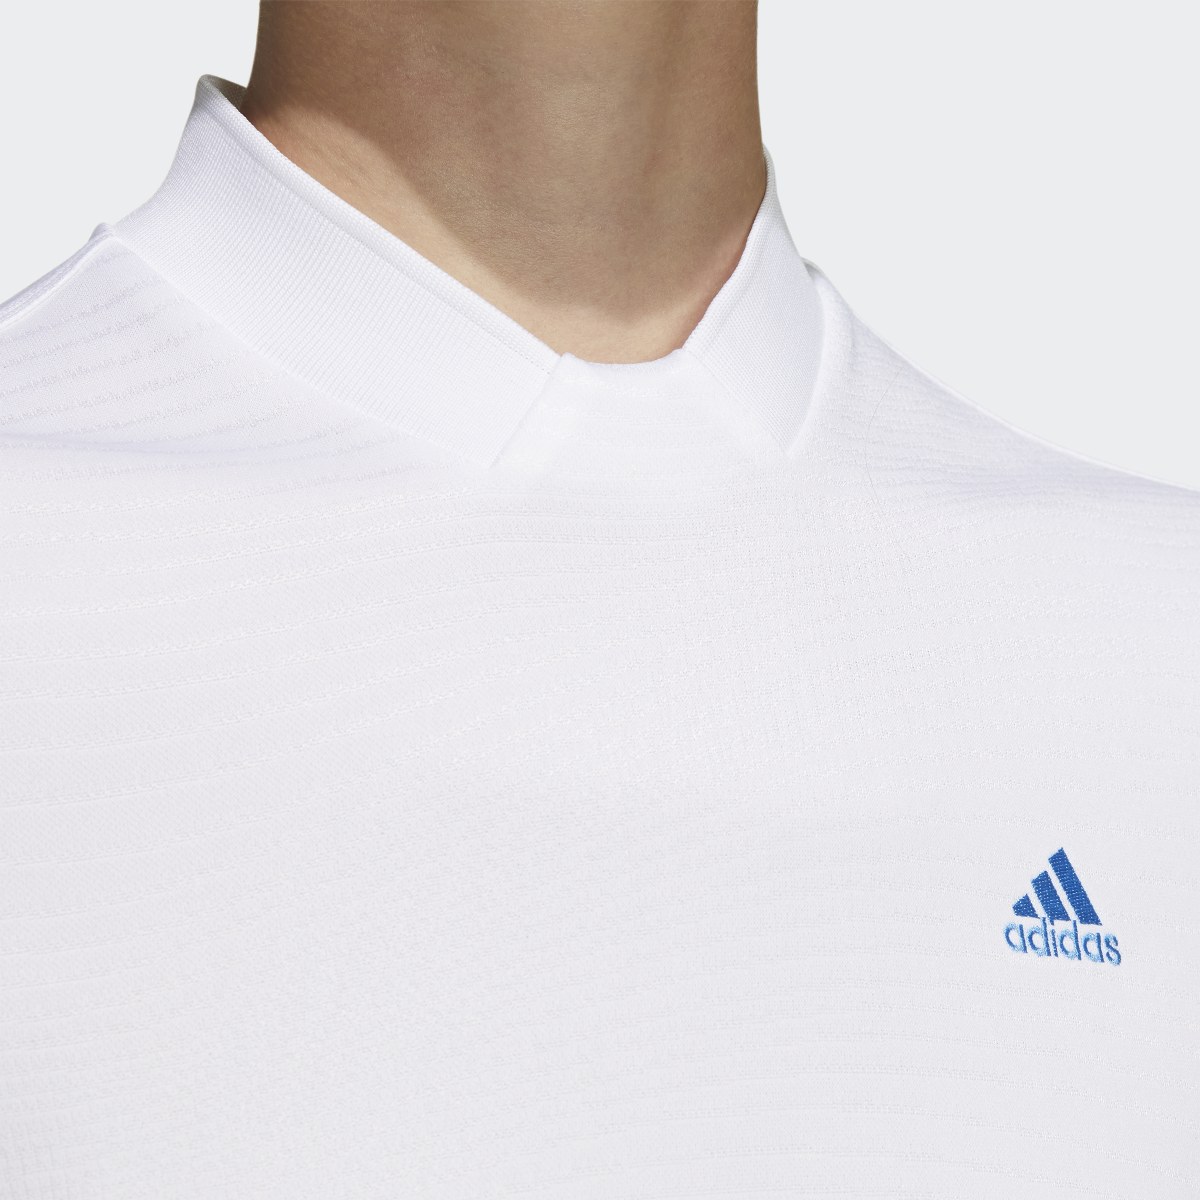 Adidas Made to be Remade Rib Collar Shirt. 6